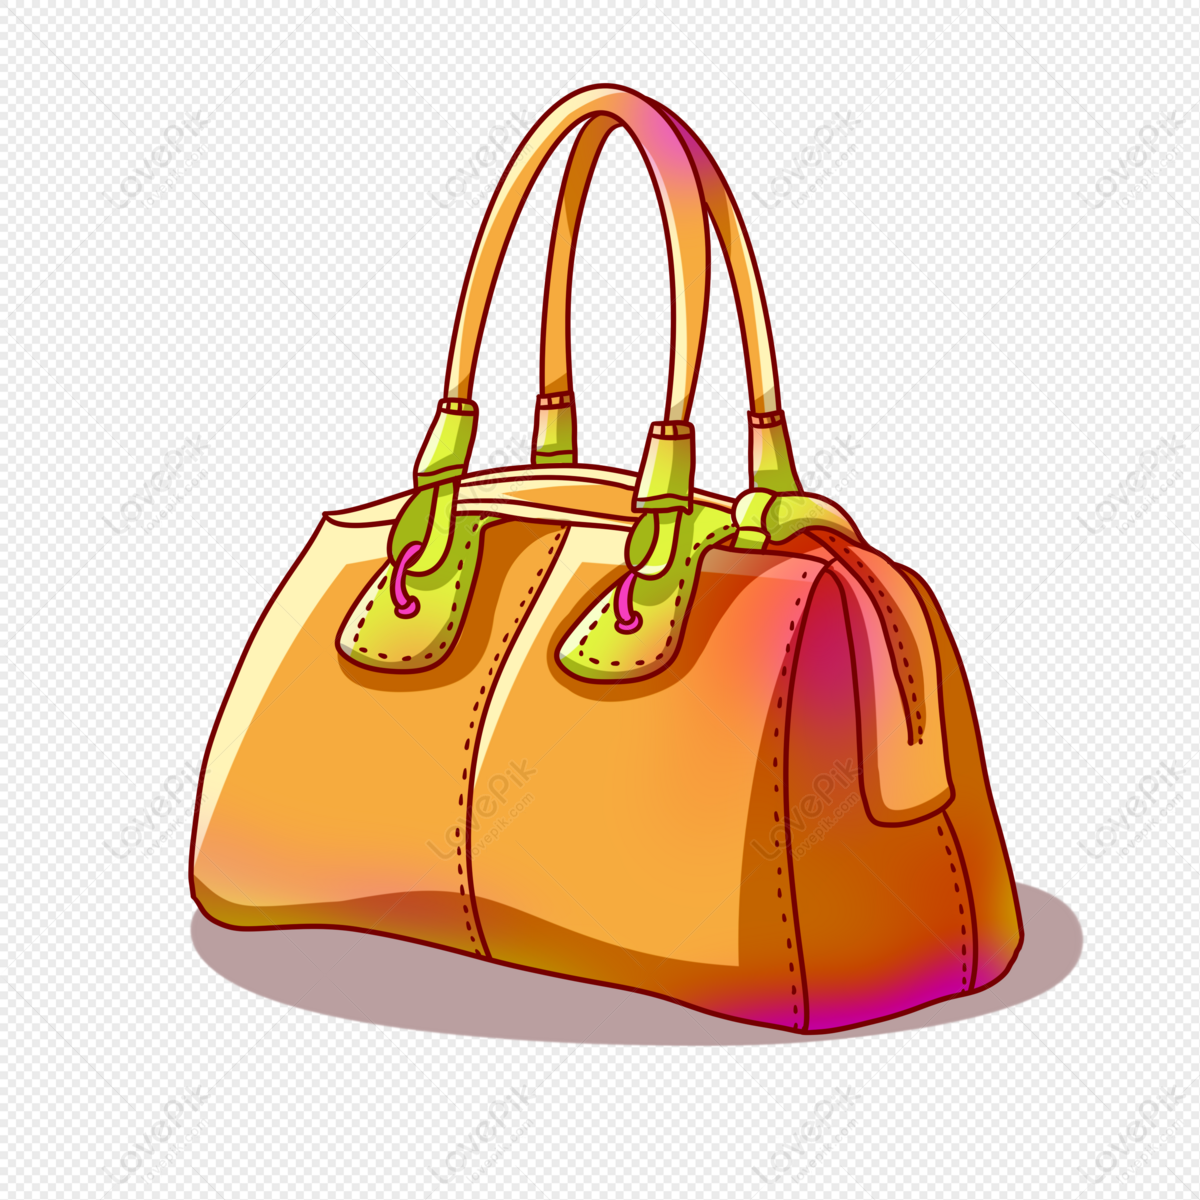 Handbag Vector Images, HD Pictures For Free Vectors Download - Lovepik.com